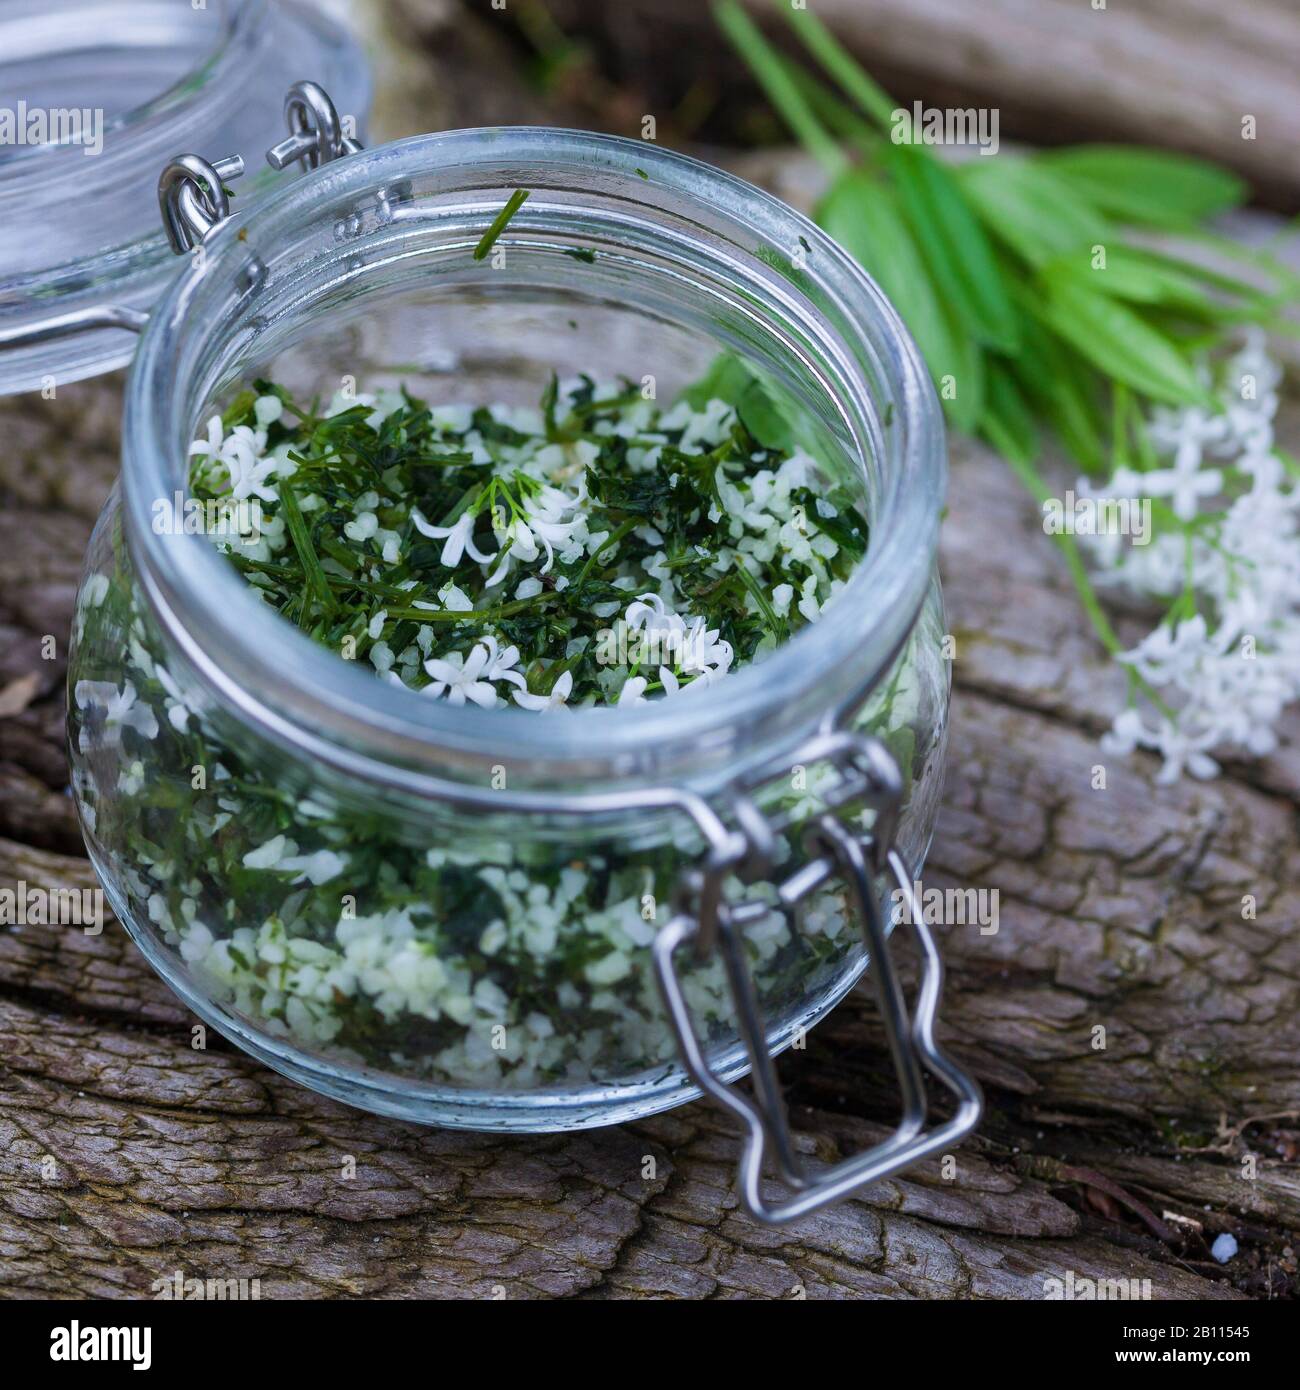 Corva dulce (Galium odoratum), sal de hierbas hecha de corva dulce, Alemania Foto de stock